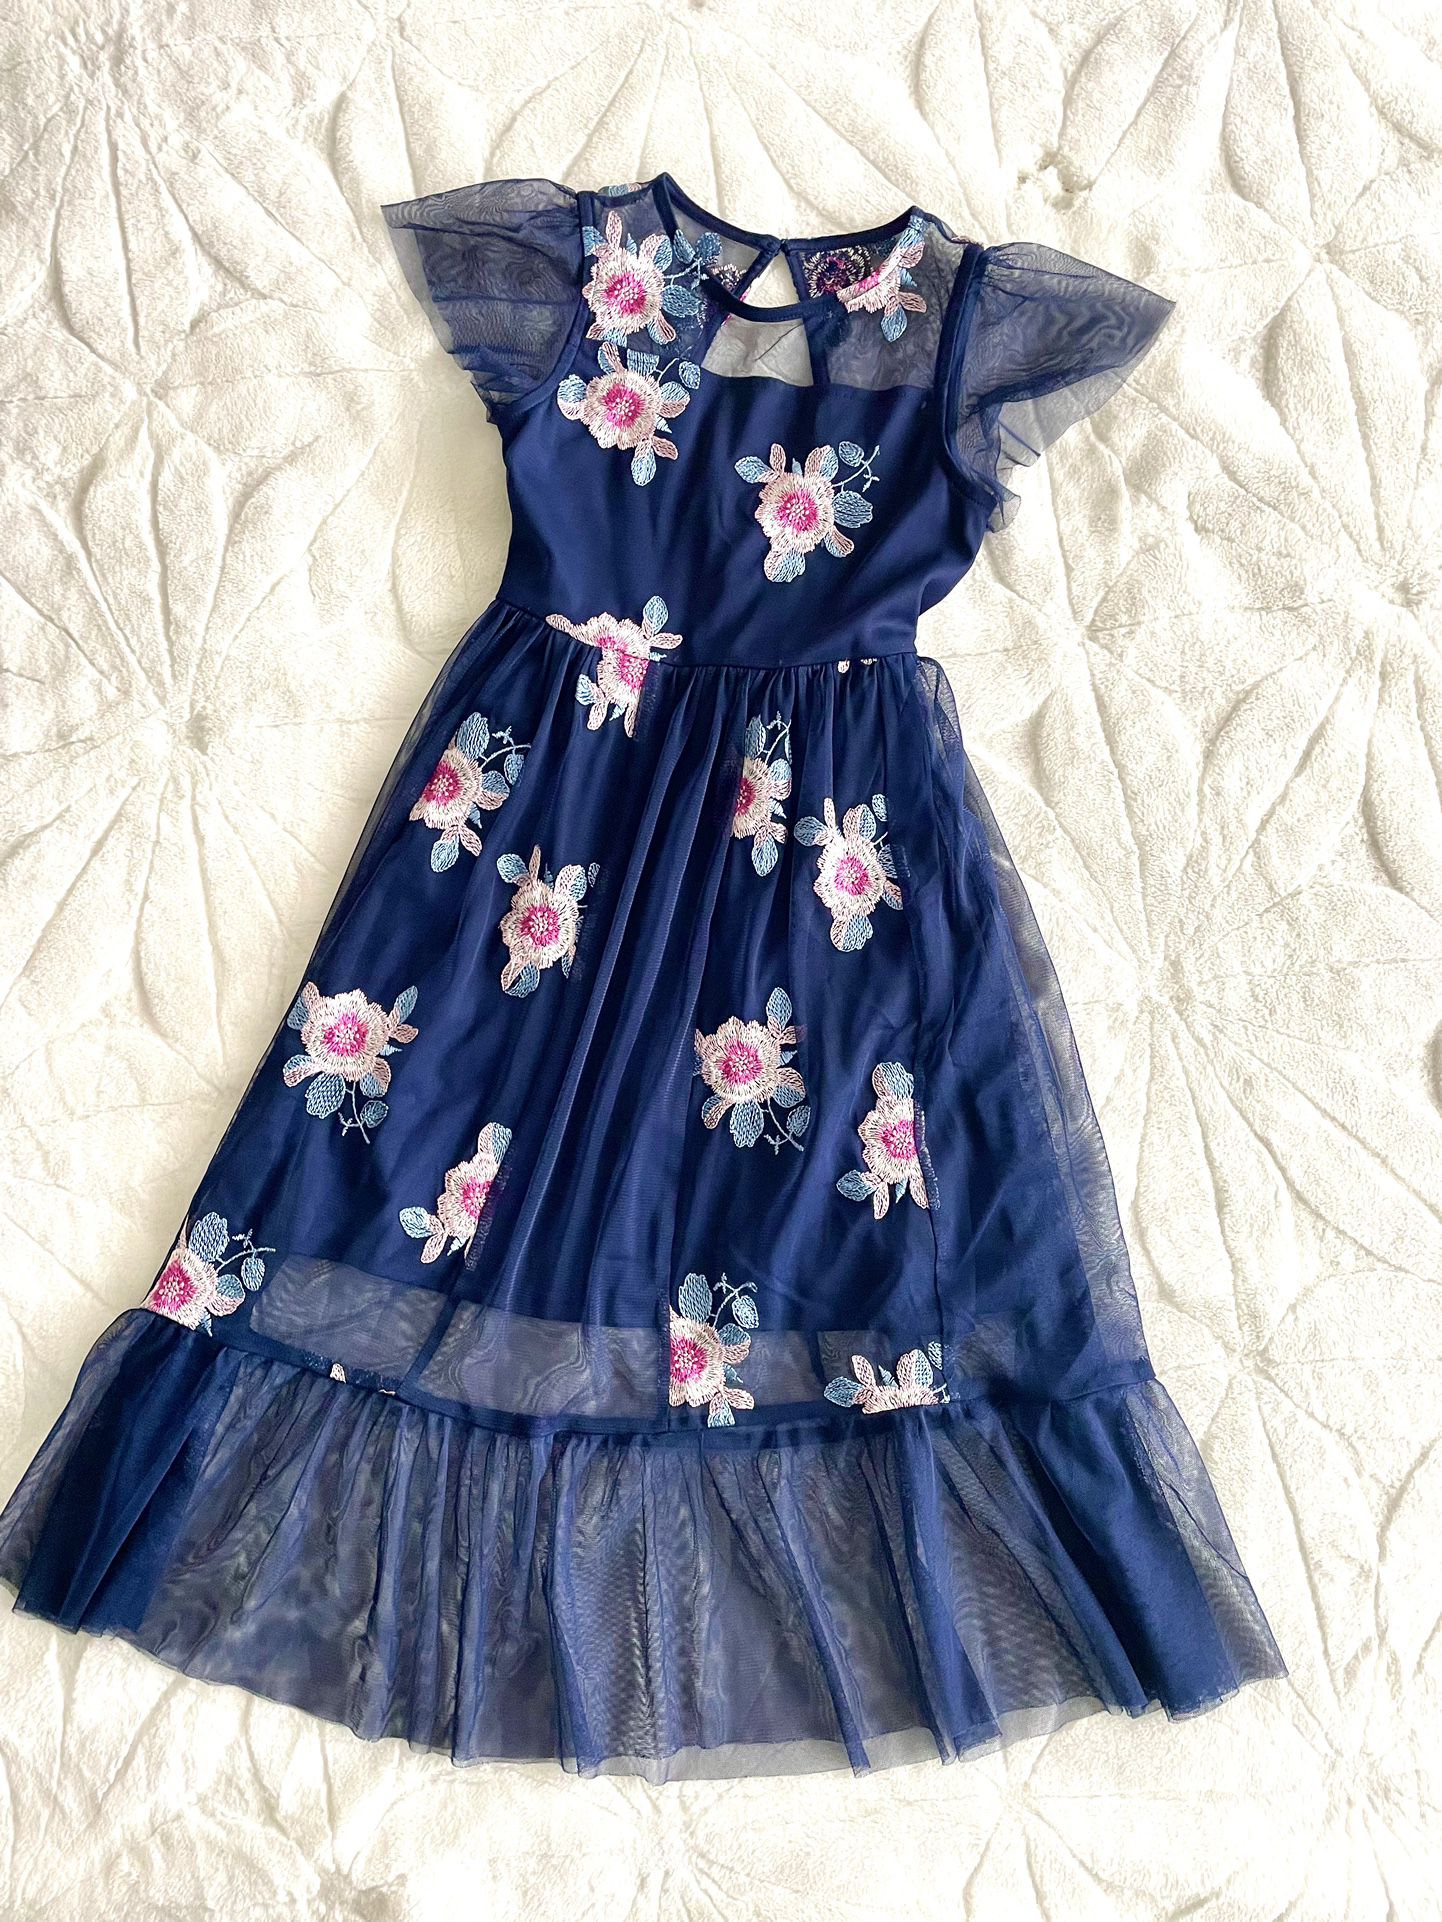 TRIXXI GIRL Floral Navy Blue Dress Sz Small